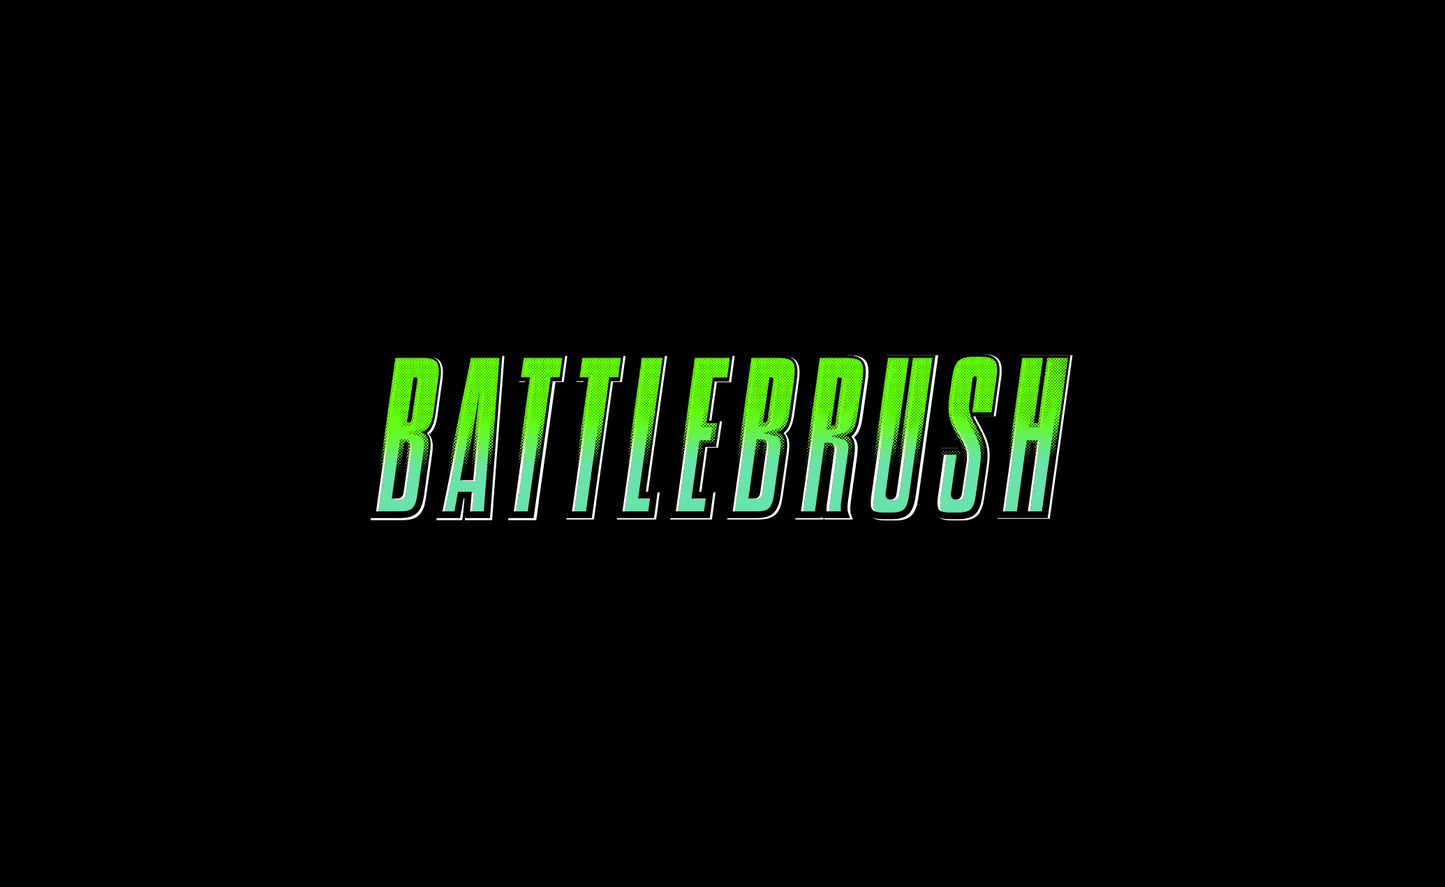 BattleBrush